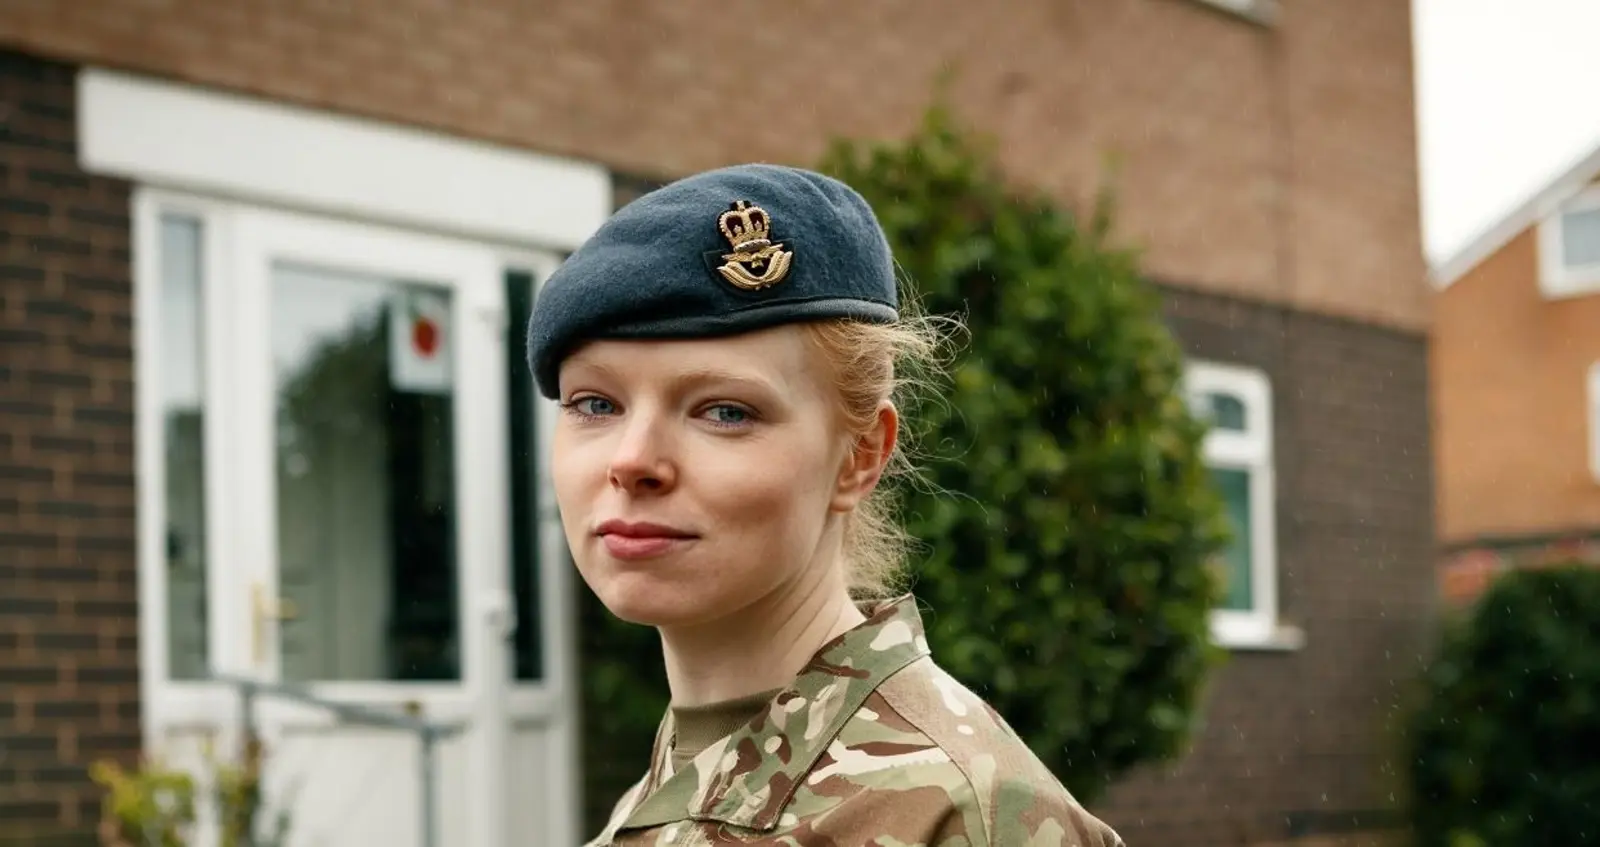 Samantha Rawlinson in uniform outside her home 